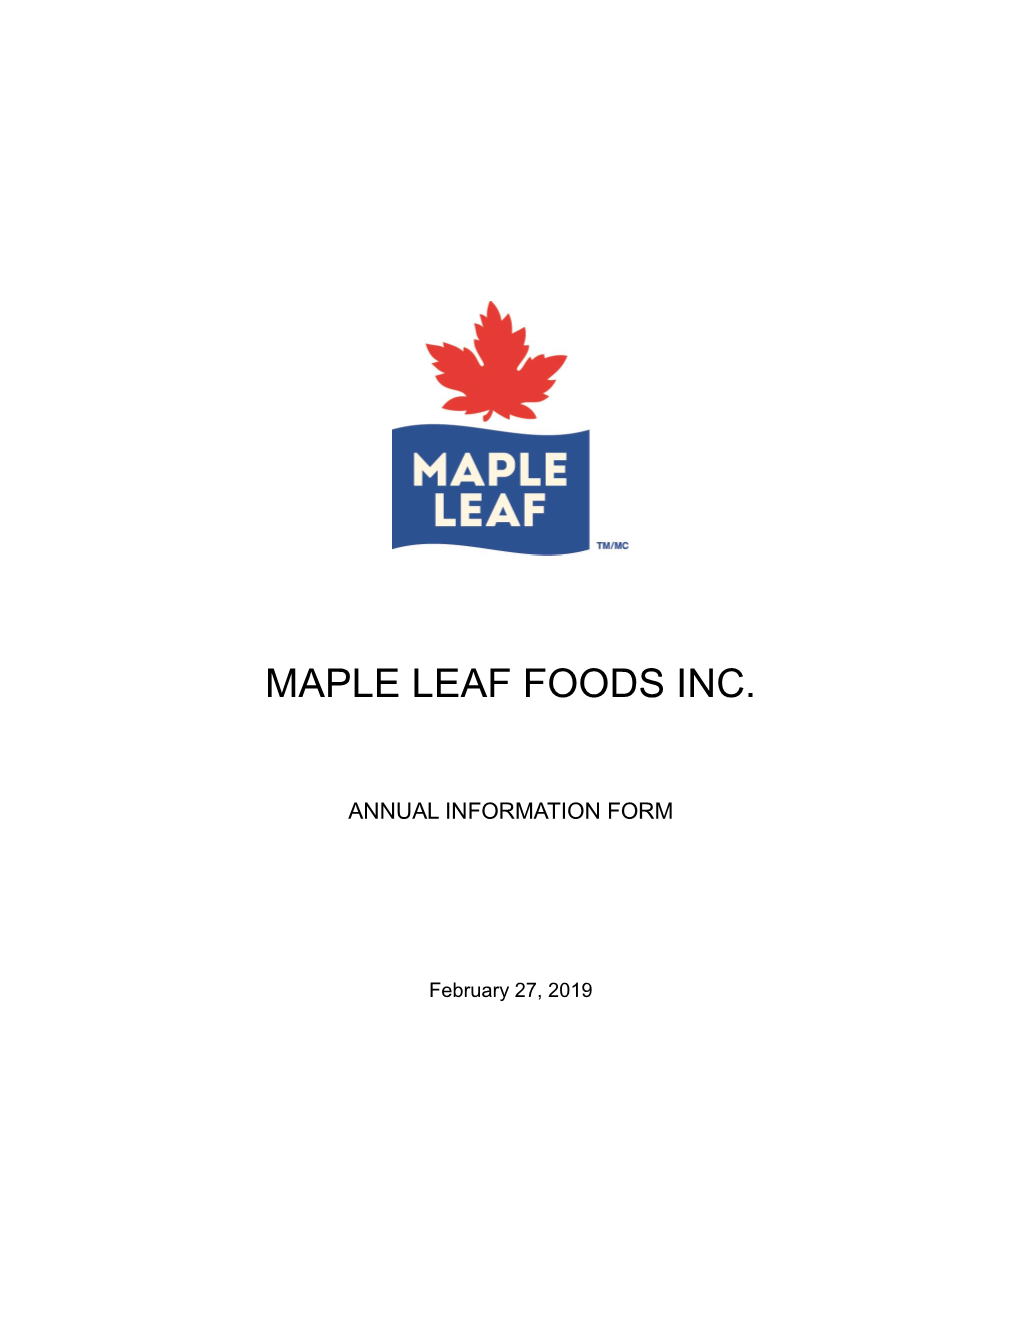 Maple Leaf Foods 2019 Annual Information Form